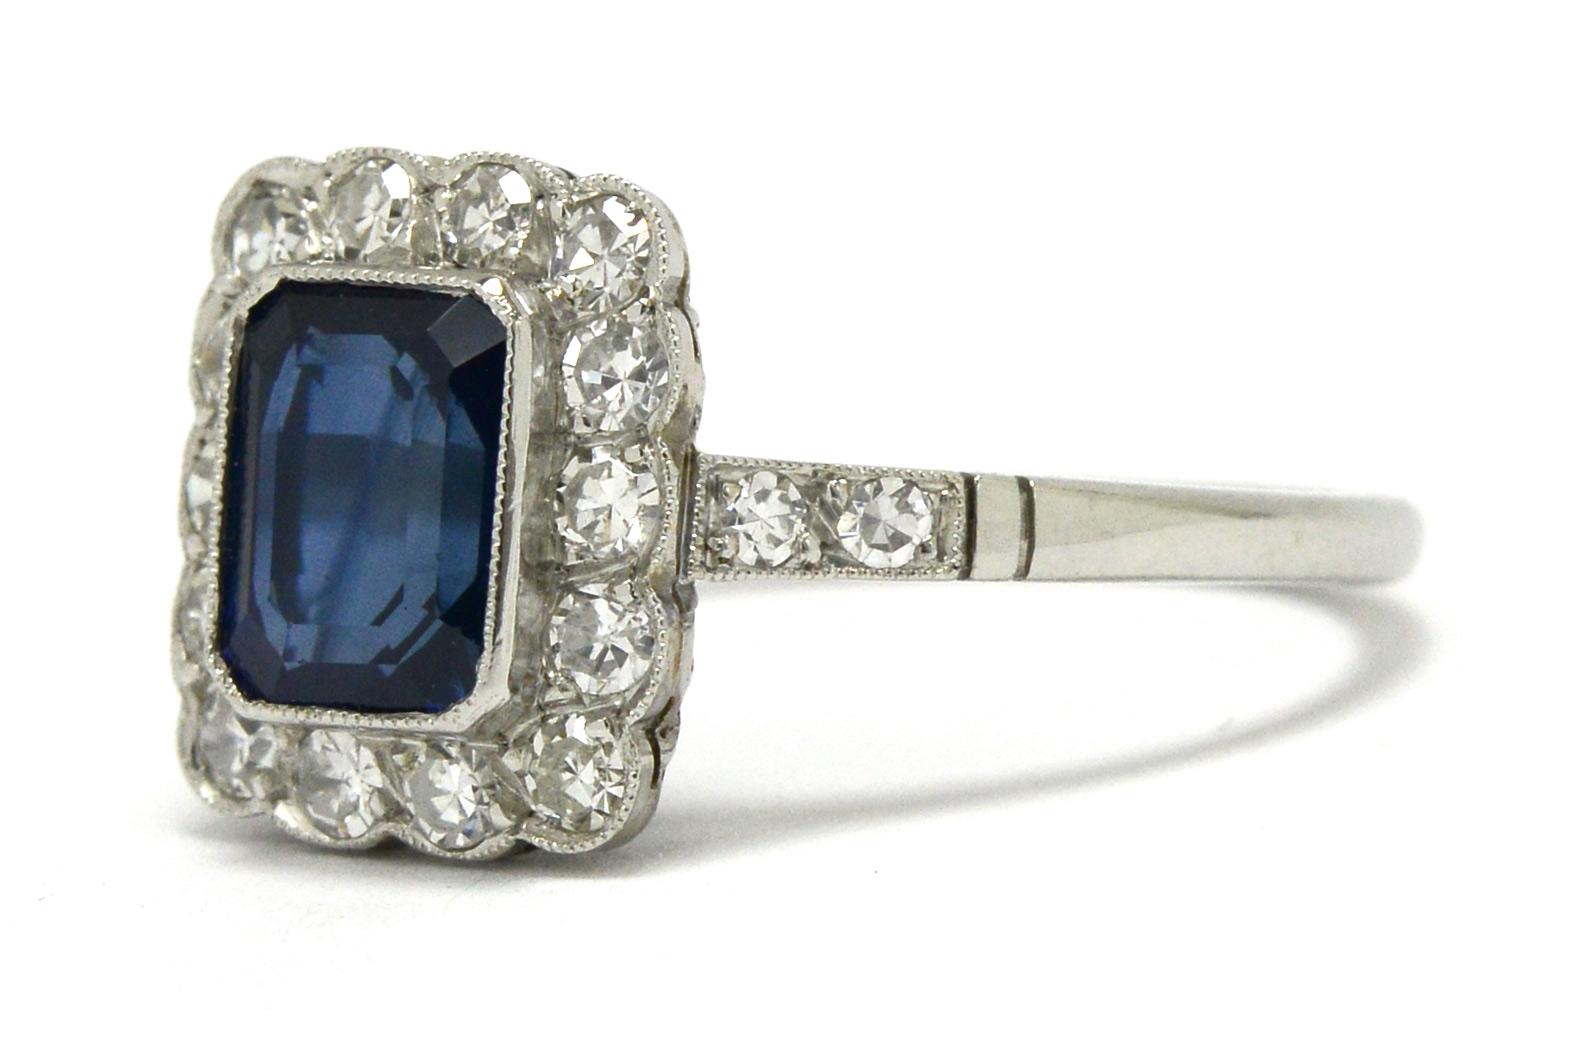 Women's Art Deco Style Sapphire Engagement Ring Emerald Cut Blue Gem Diamond Halo